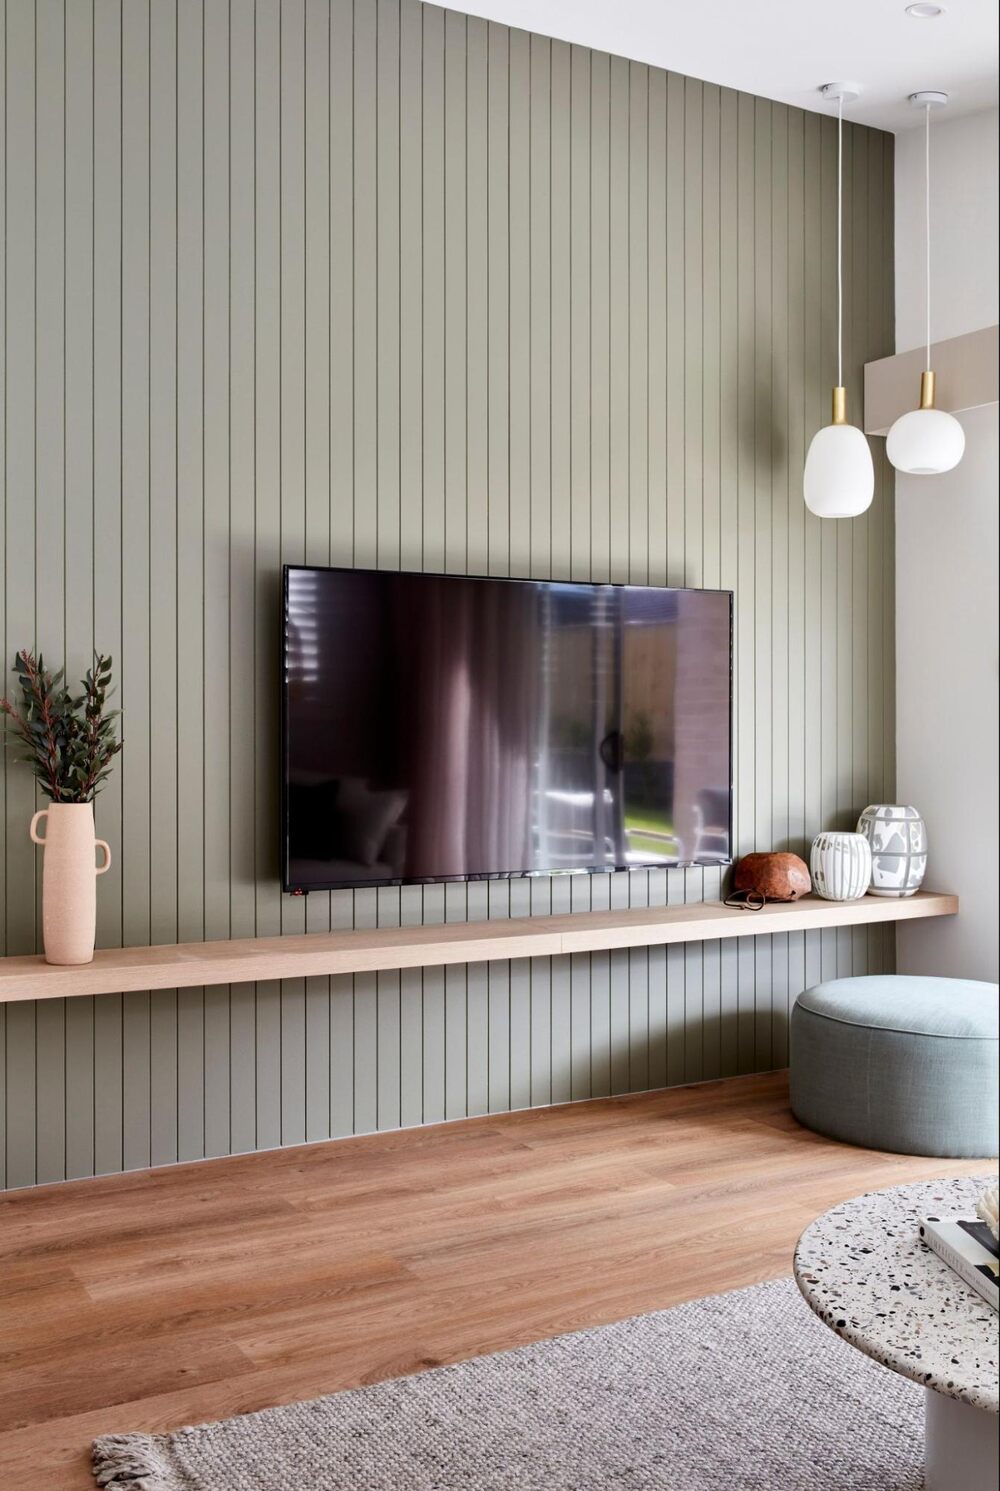 Mounted TV above a single shelf